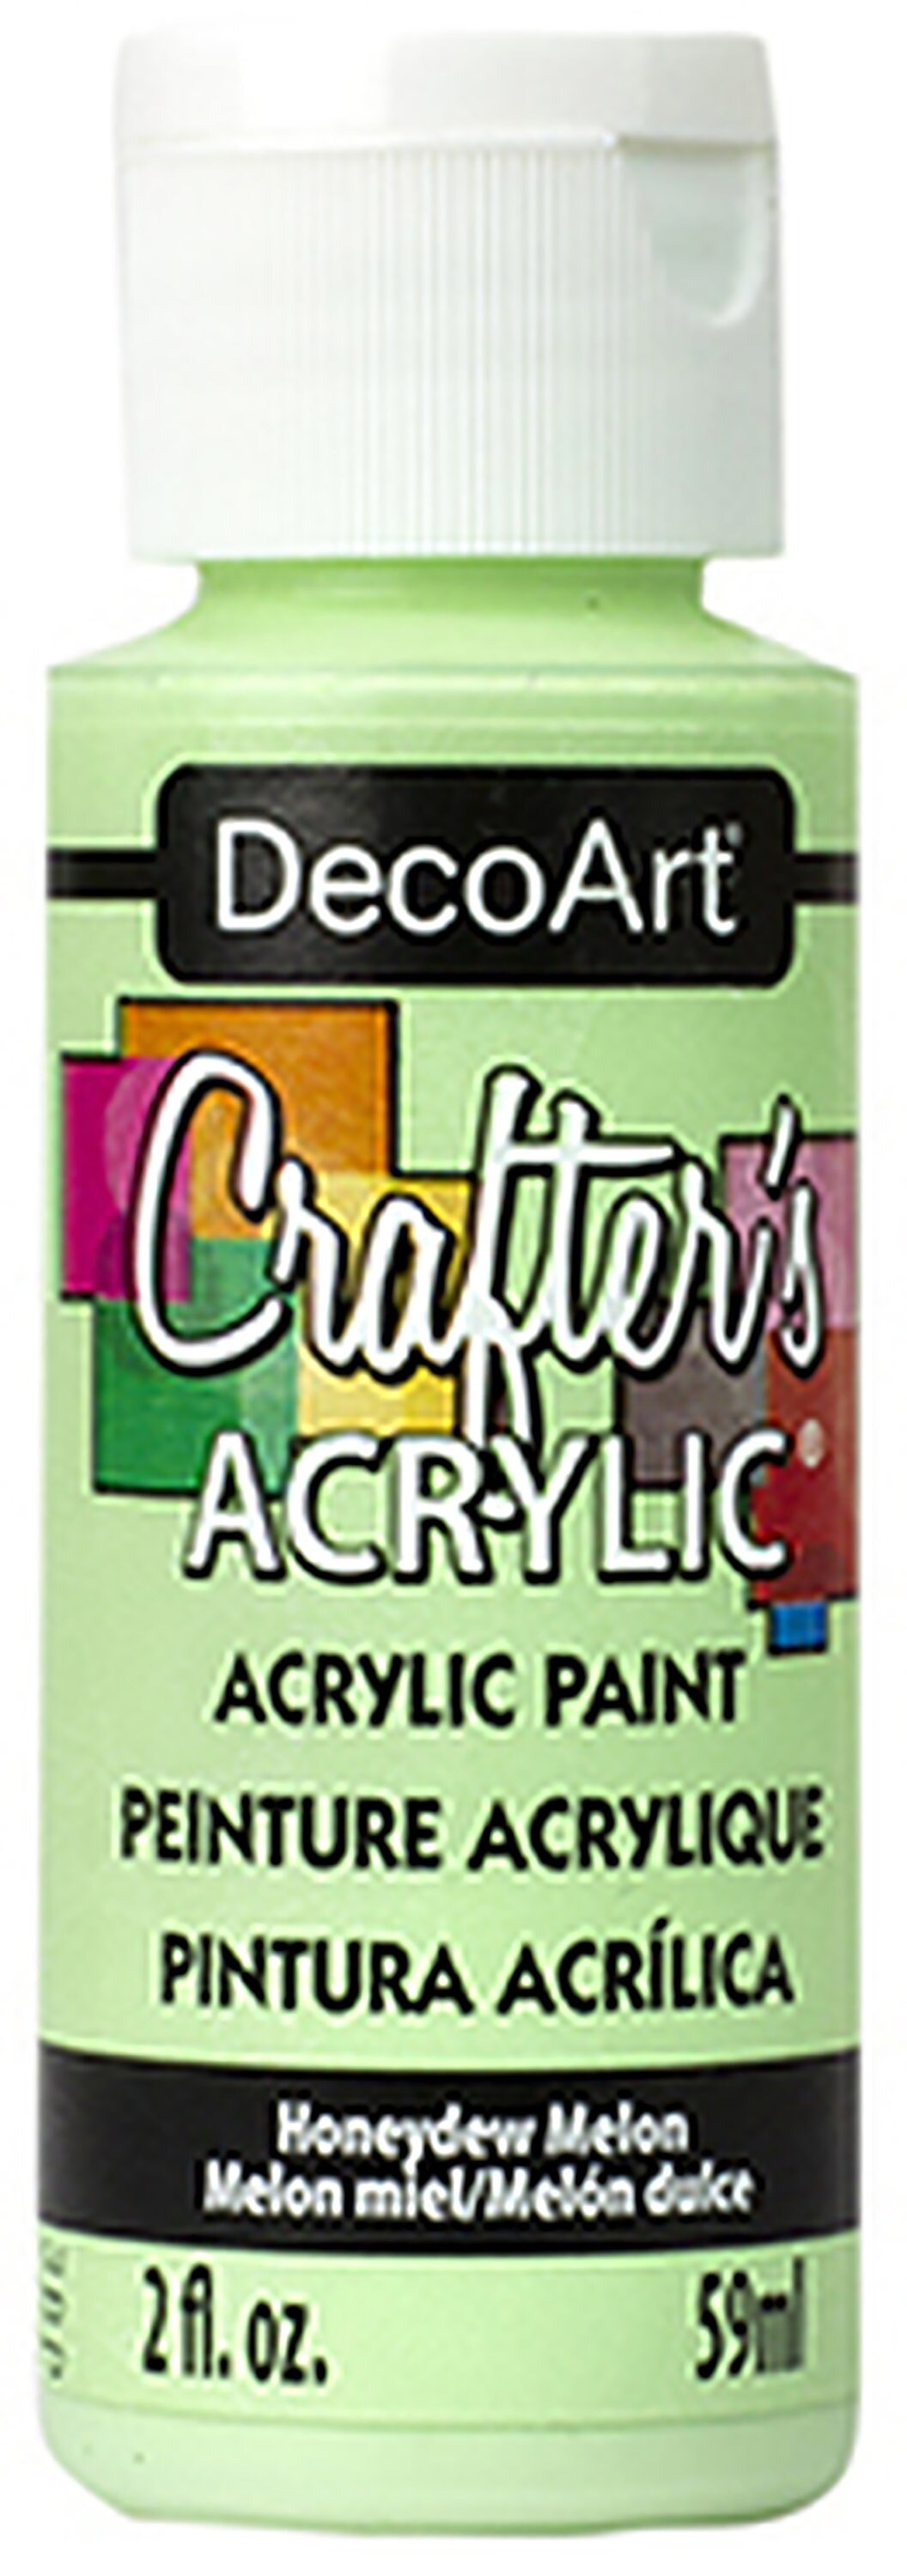 Decoart Crafters Acrylic Paint Dark Green Shades 59ml 2oz Bottles -   Finland